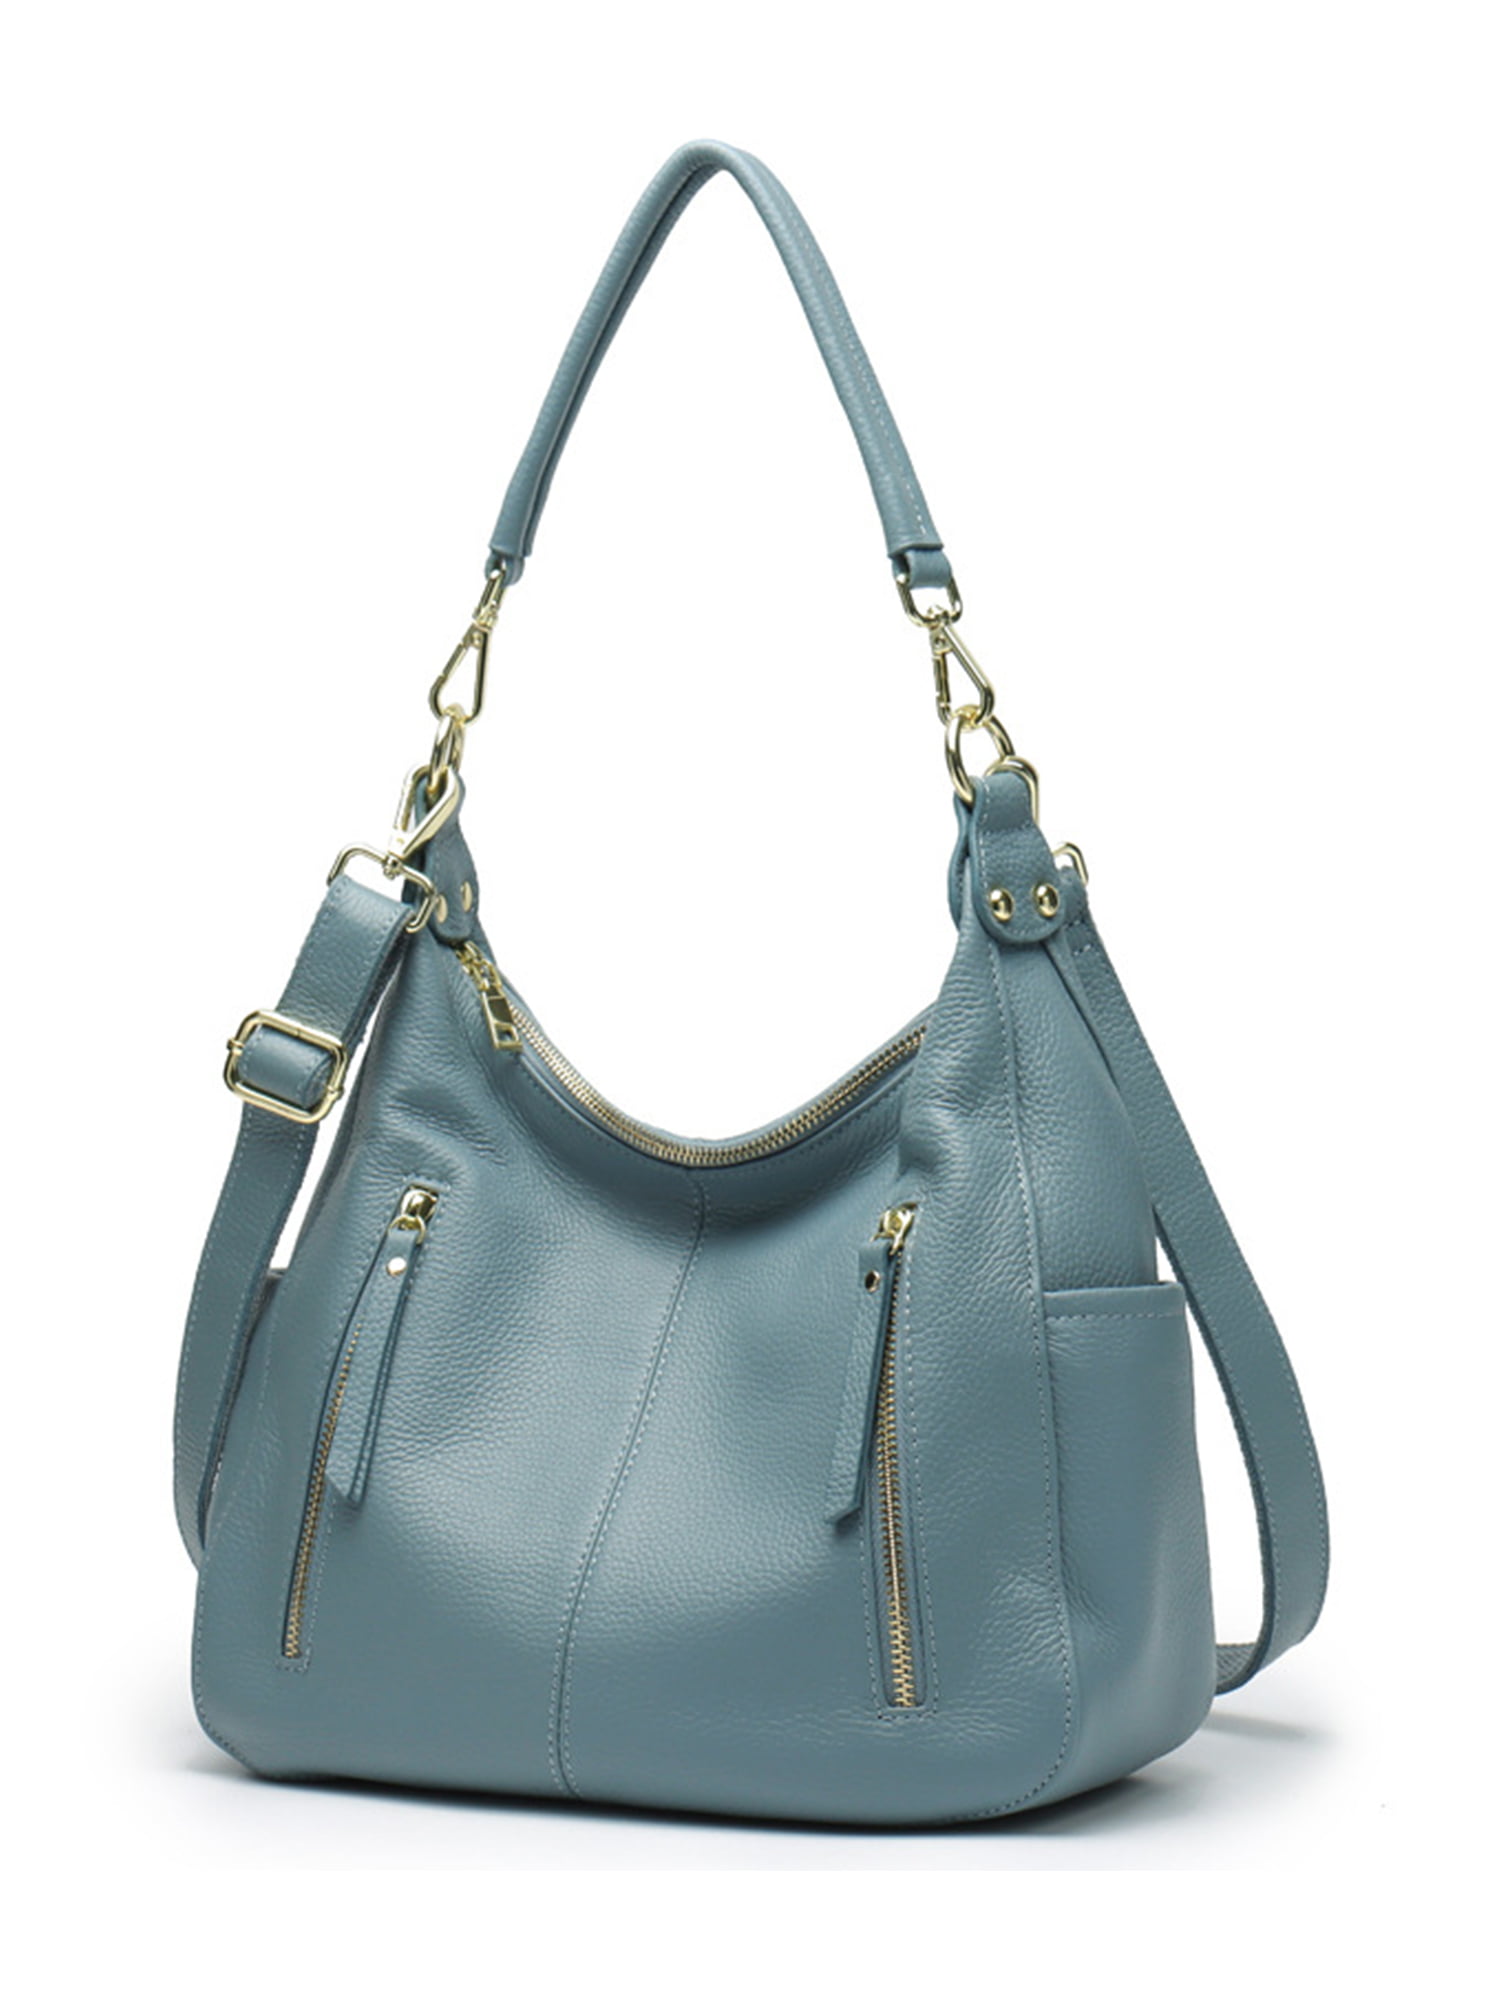 Designer Style LARGE Women Handbag Hobo Shoulder CrossBody Messenger Tote Bag 